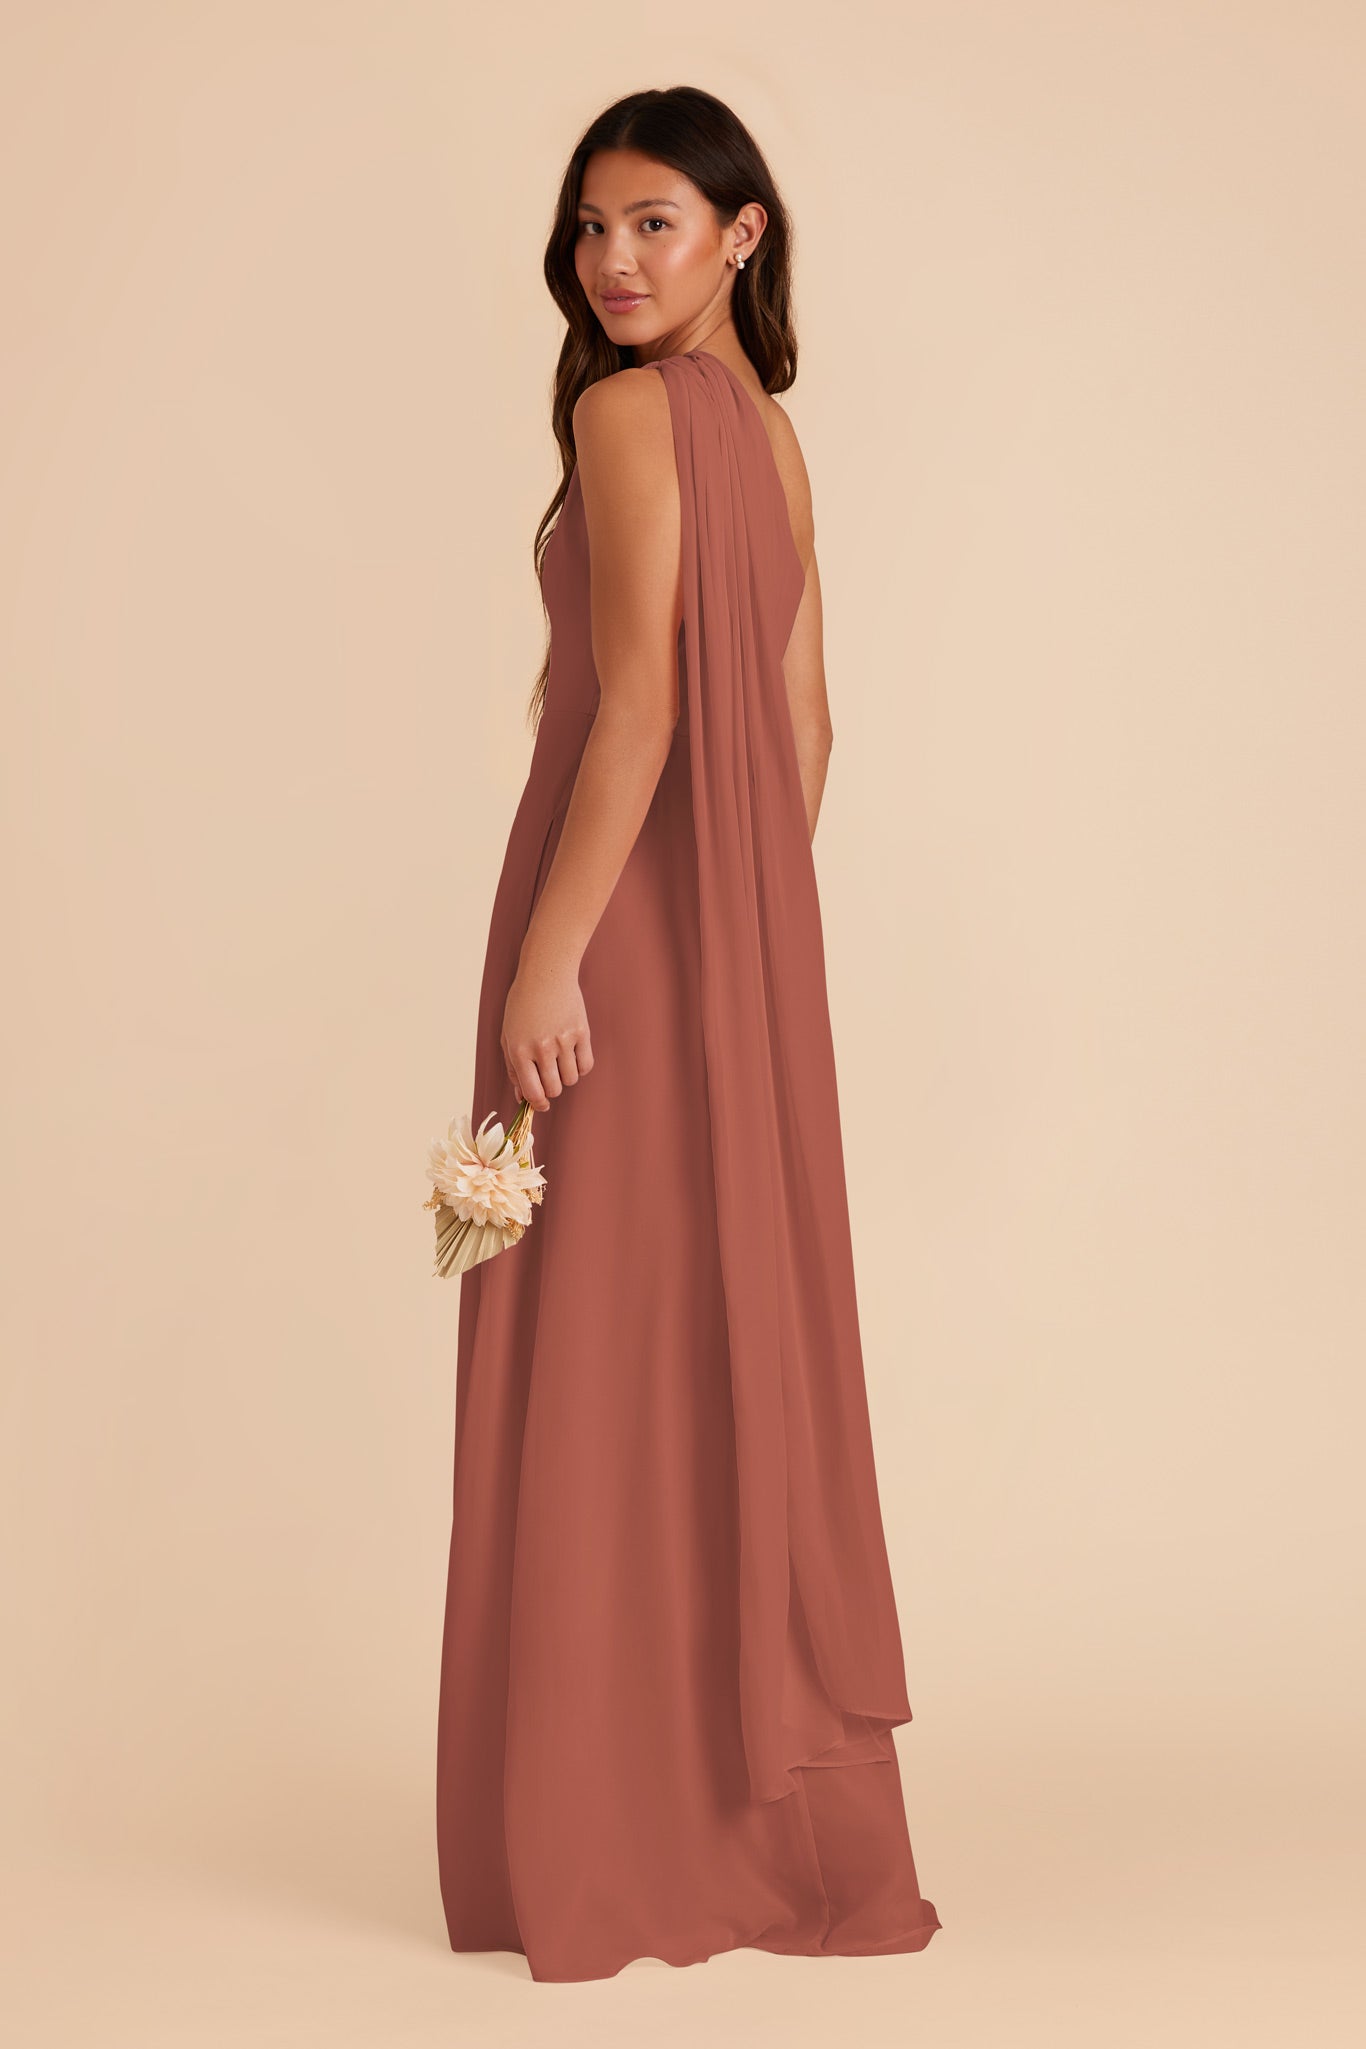 Desert Rose Melissa Chiffon Dress by Birdy Grey